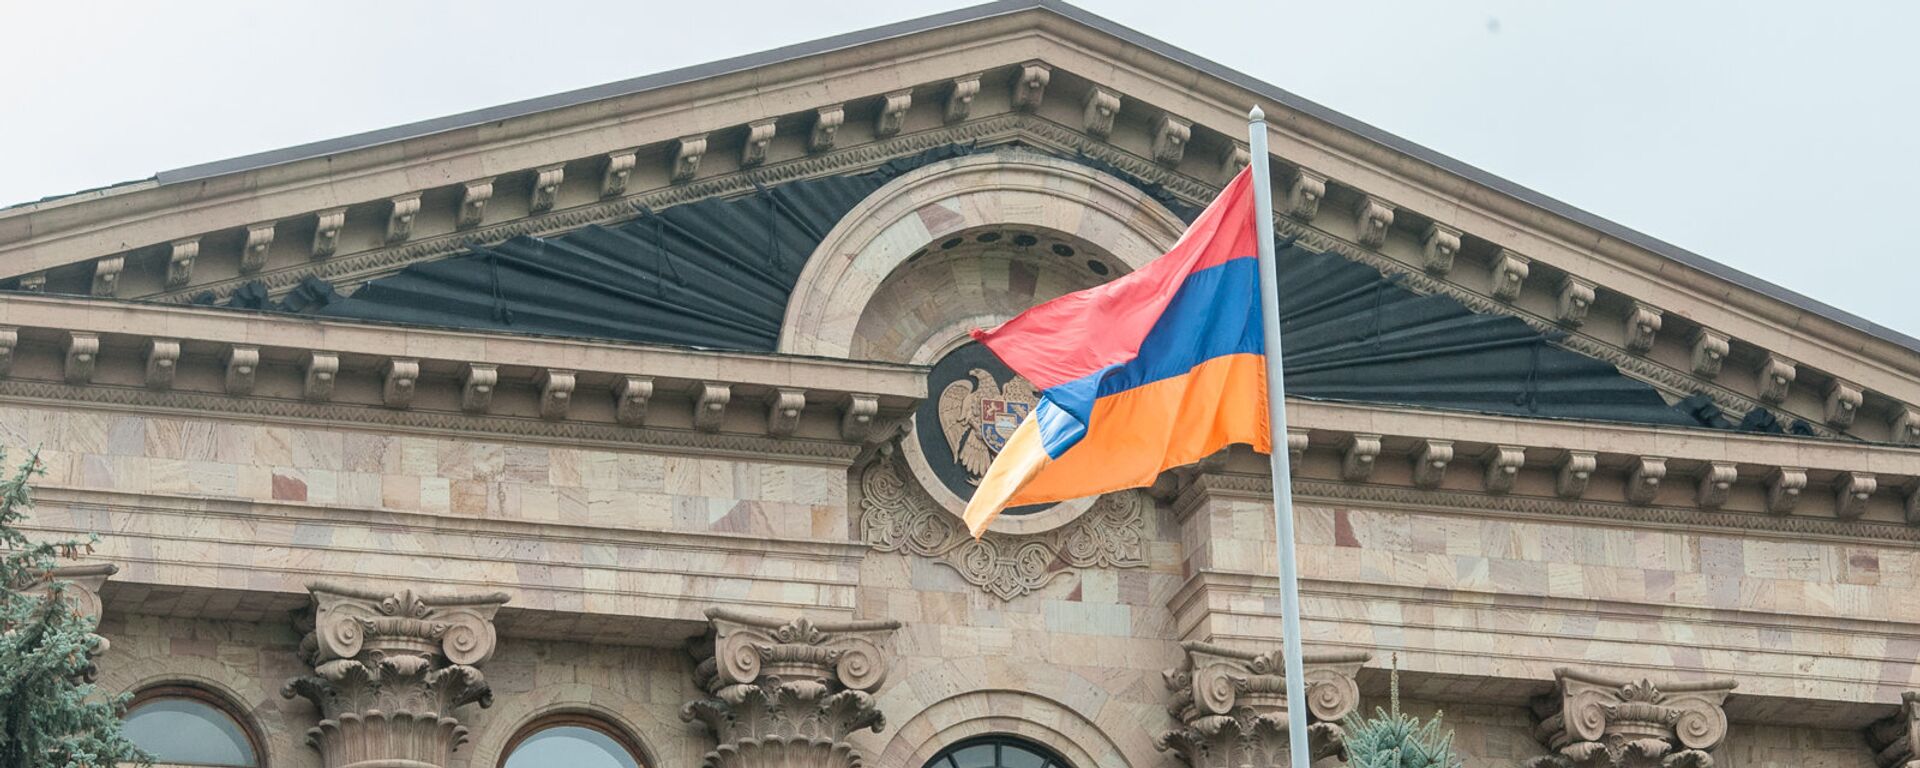 Здание Национального Собрания Армении - Sputnik Արմենիա, 1920, 10.09.2021